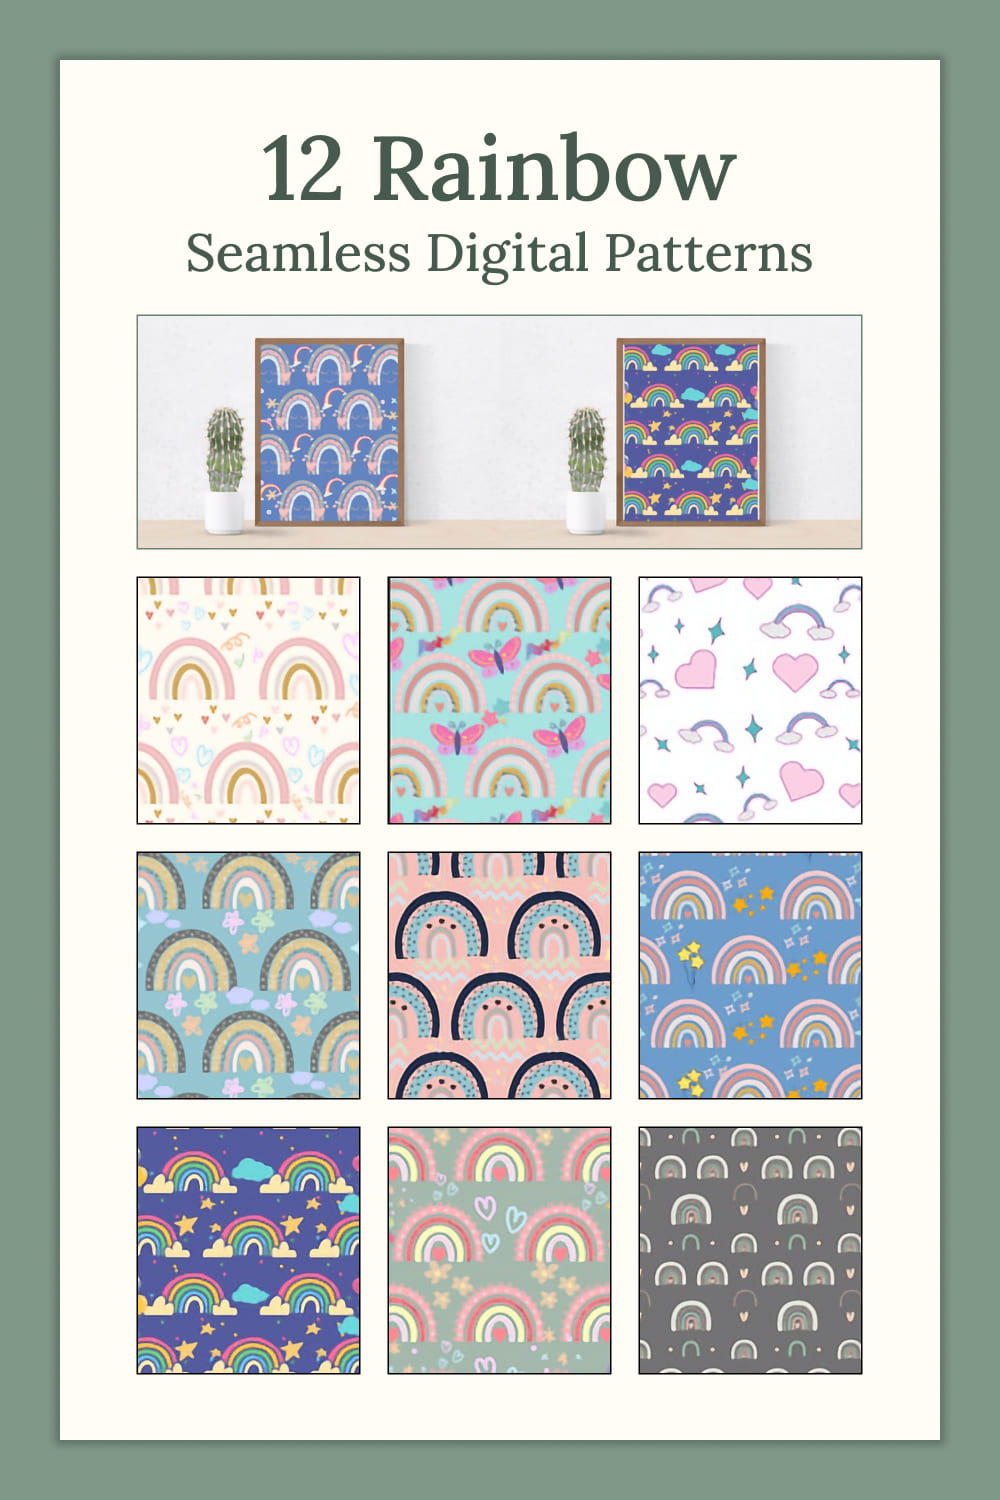 12 Rainbow Seamless Digital Patterns - Pinterest.